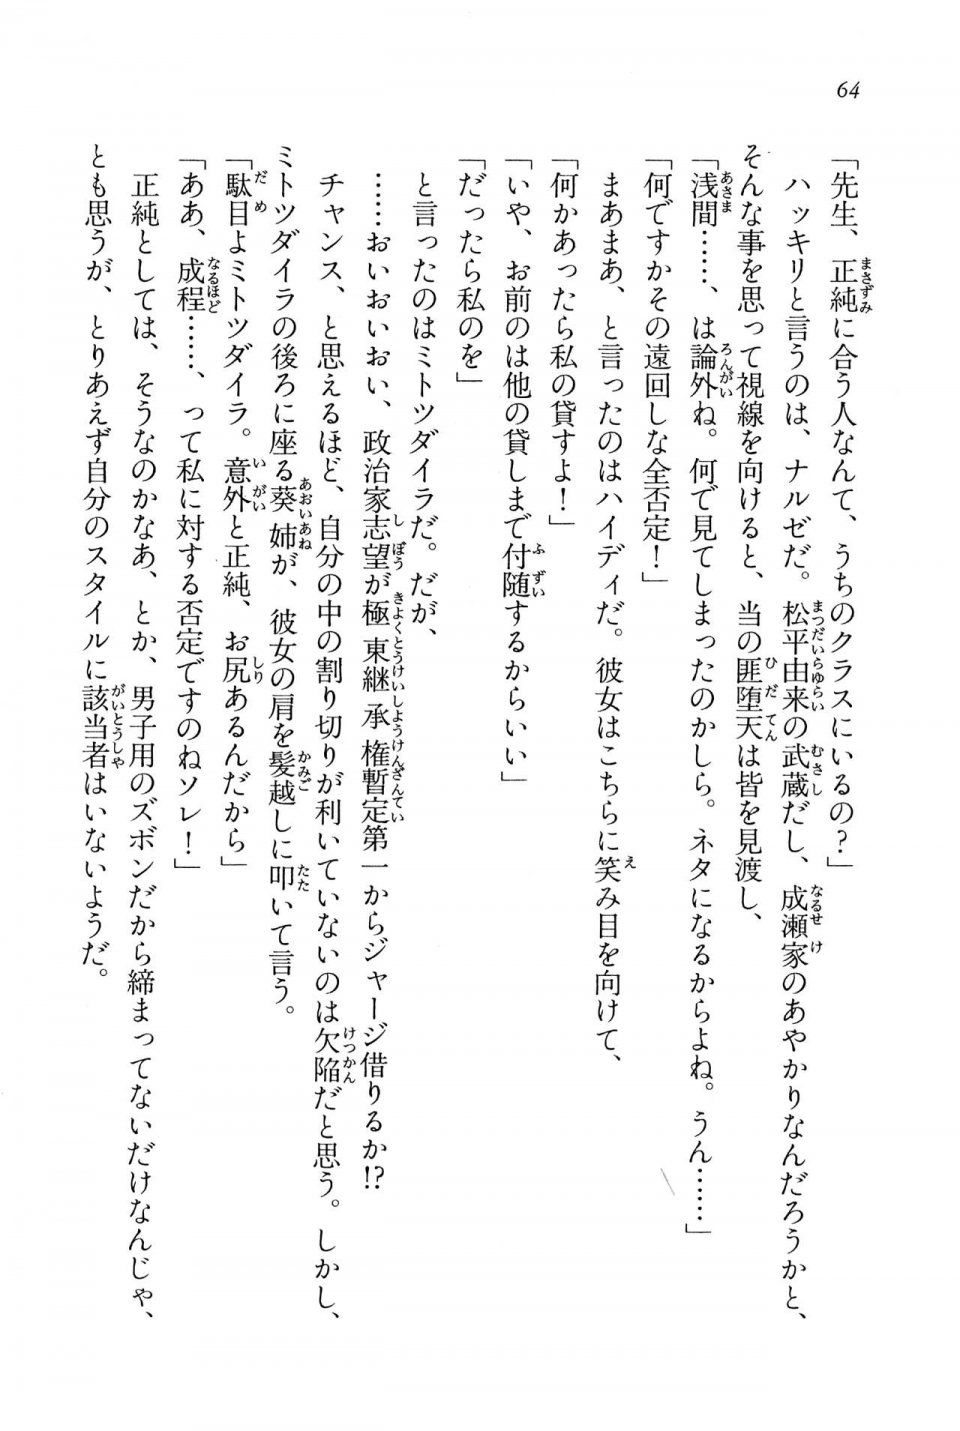 Kyoukai Senjou no Horizon BD Special Mininovel Vol 5(3A) - Photo #68